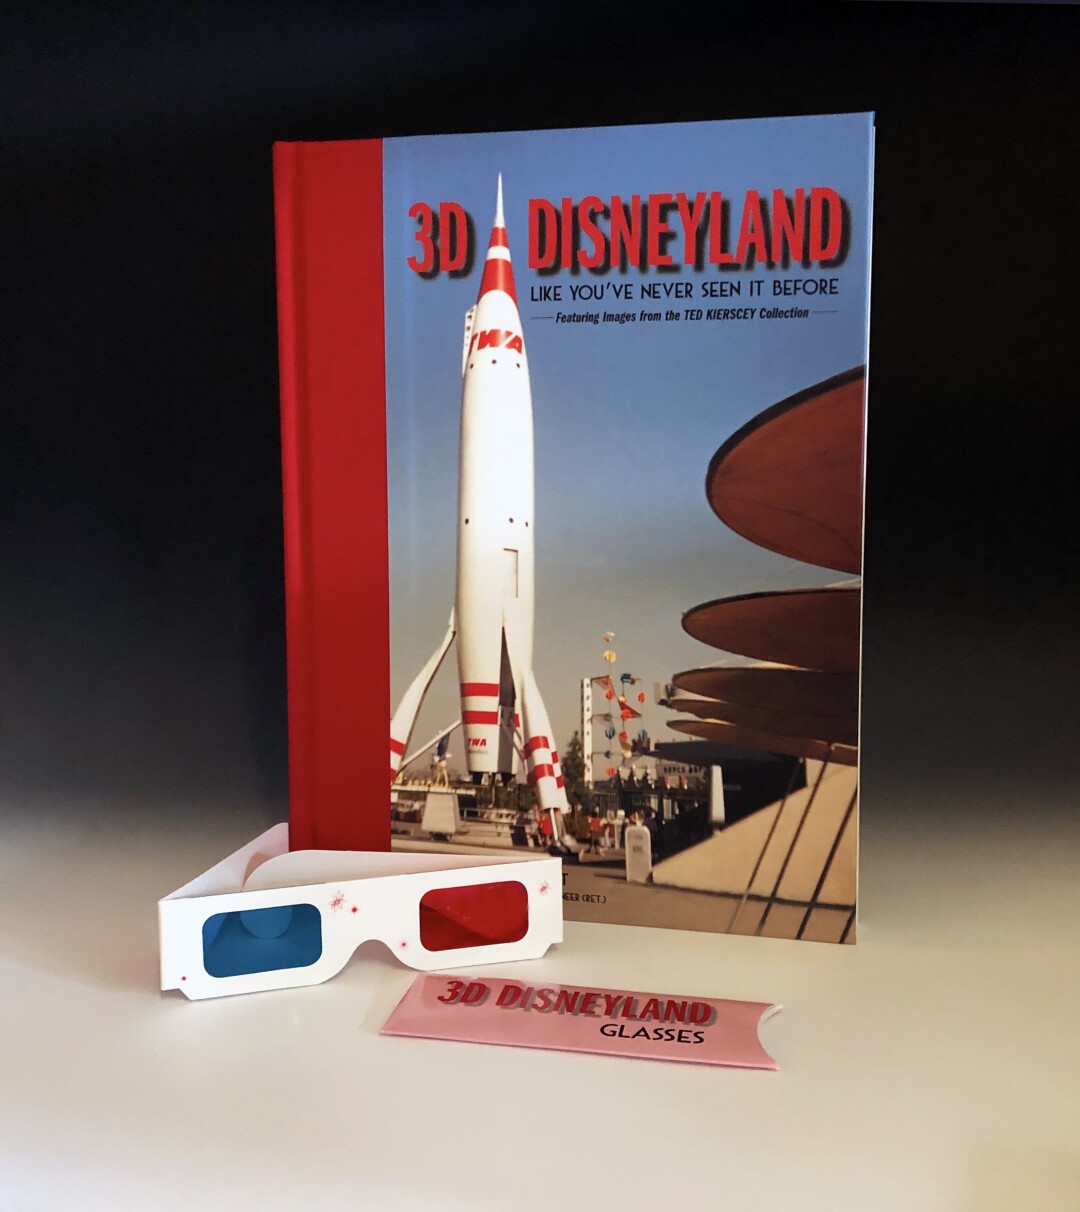 "3D Disneyland" is Disneyland nostalgia at its finest.